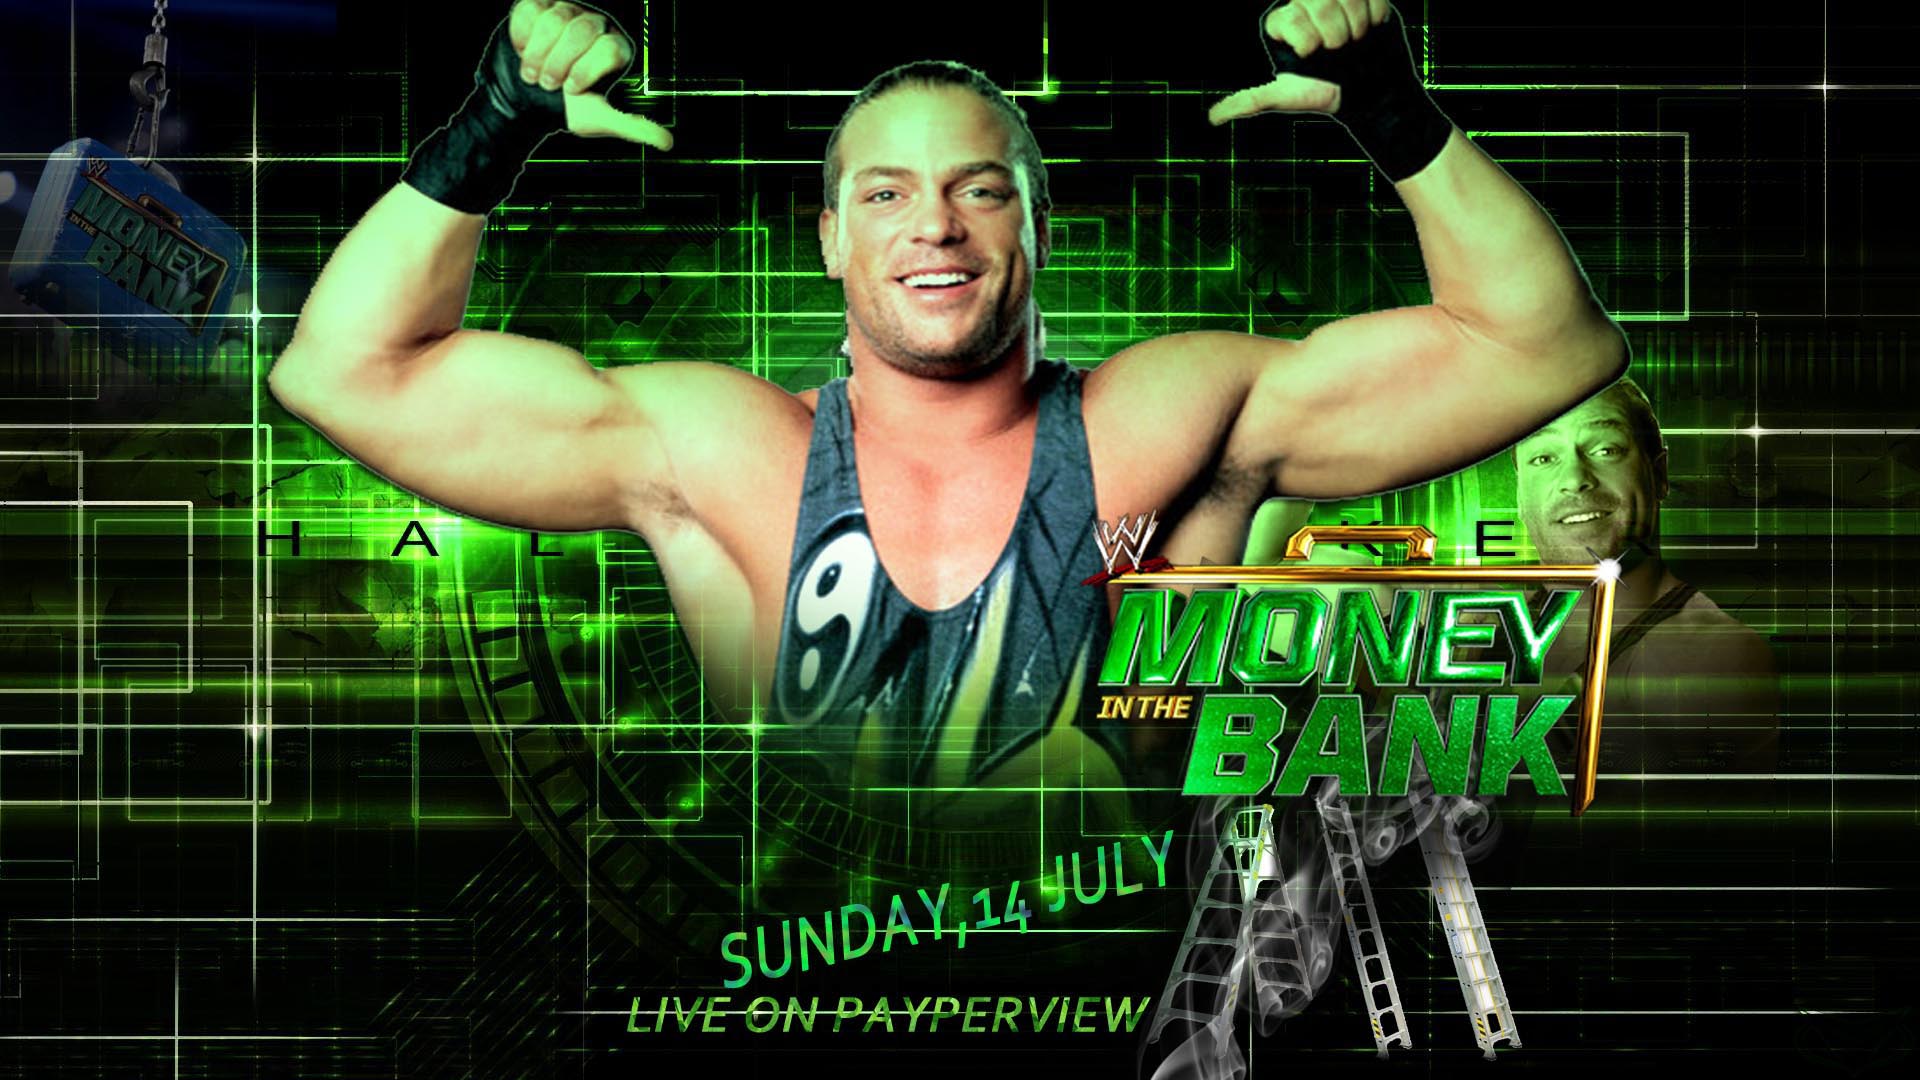 WWE Wrestler RVD 2014 HD Wallpaper Wallpaper, Image